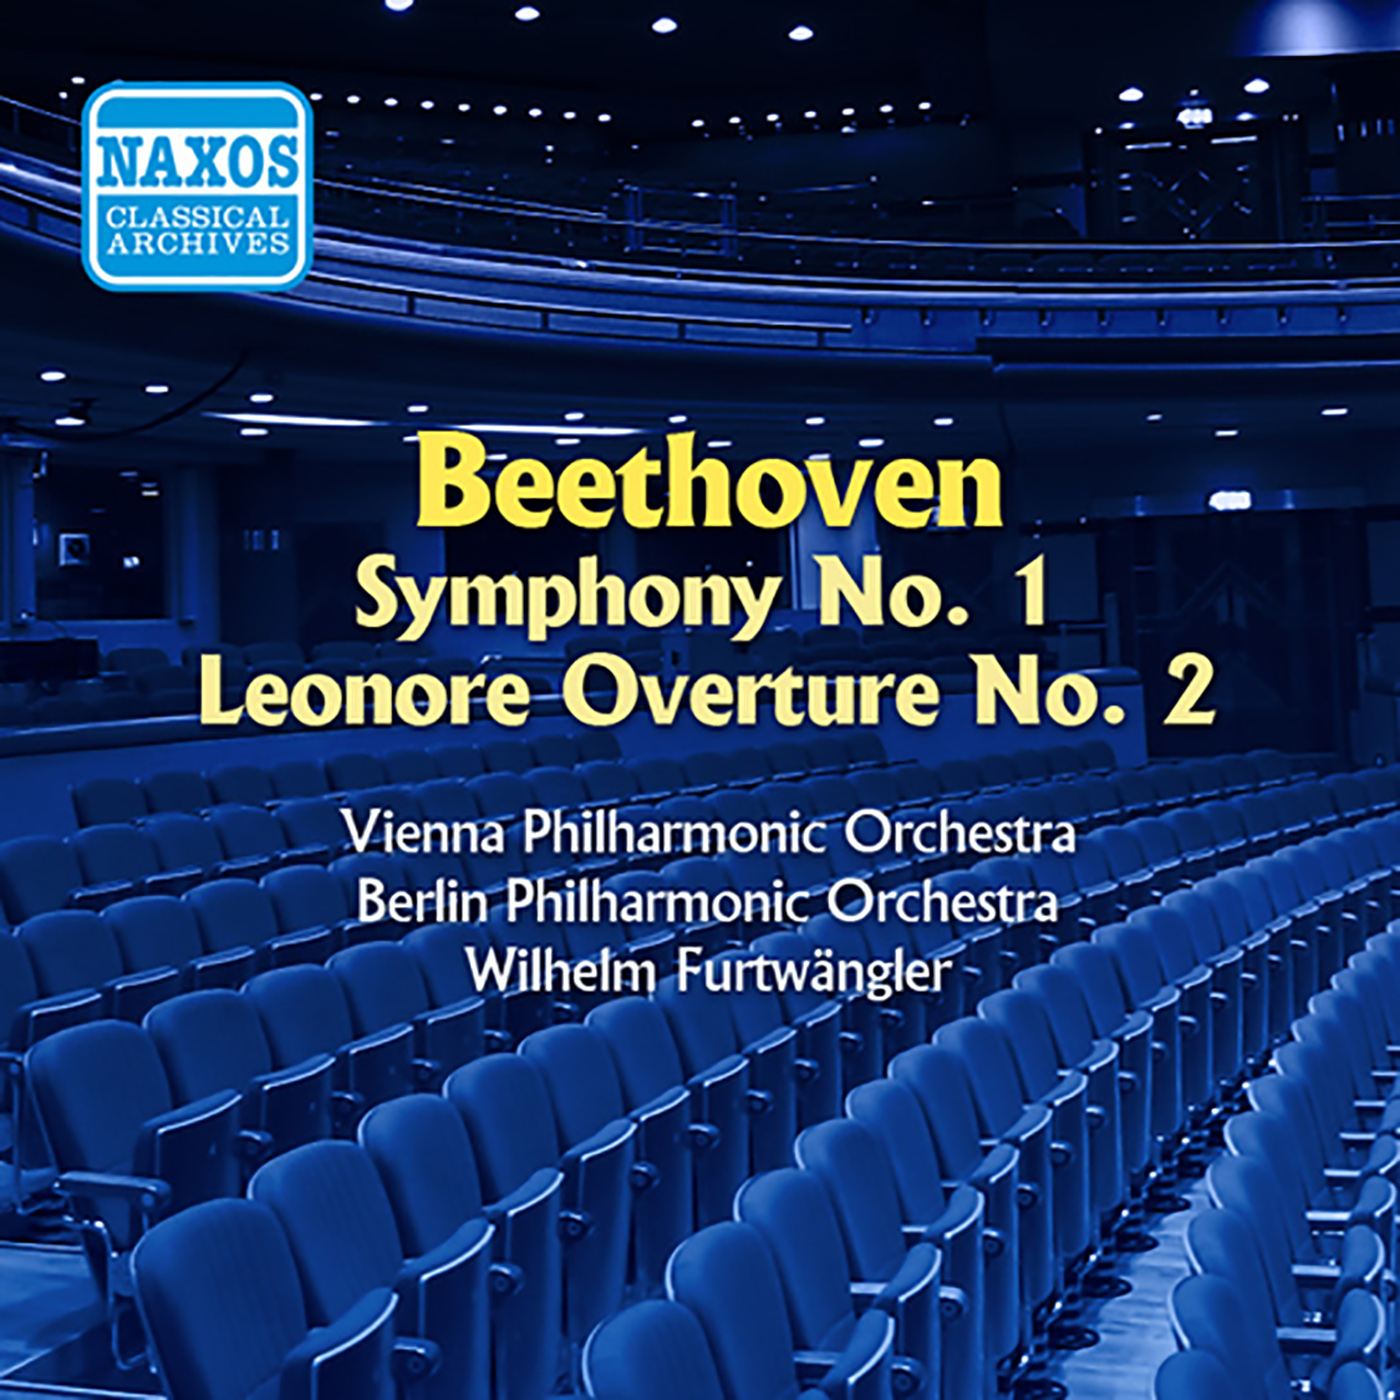 BEETHOVEN: Symphony No. 1 / Leonore Overture No. 2 (Furtwangler) (1952-54)